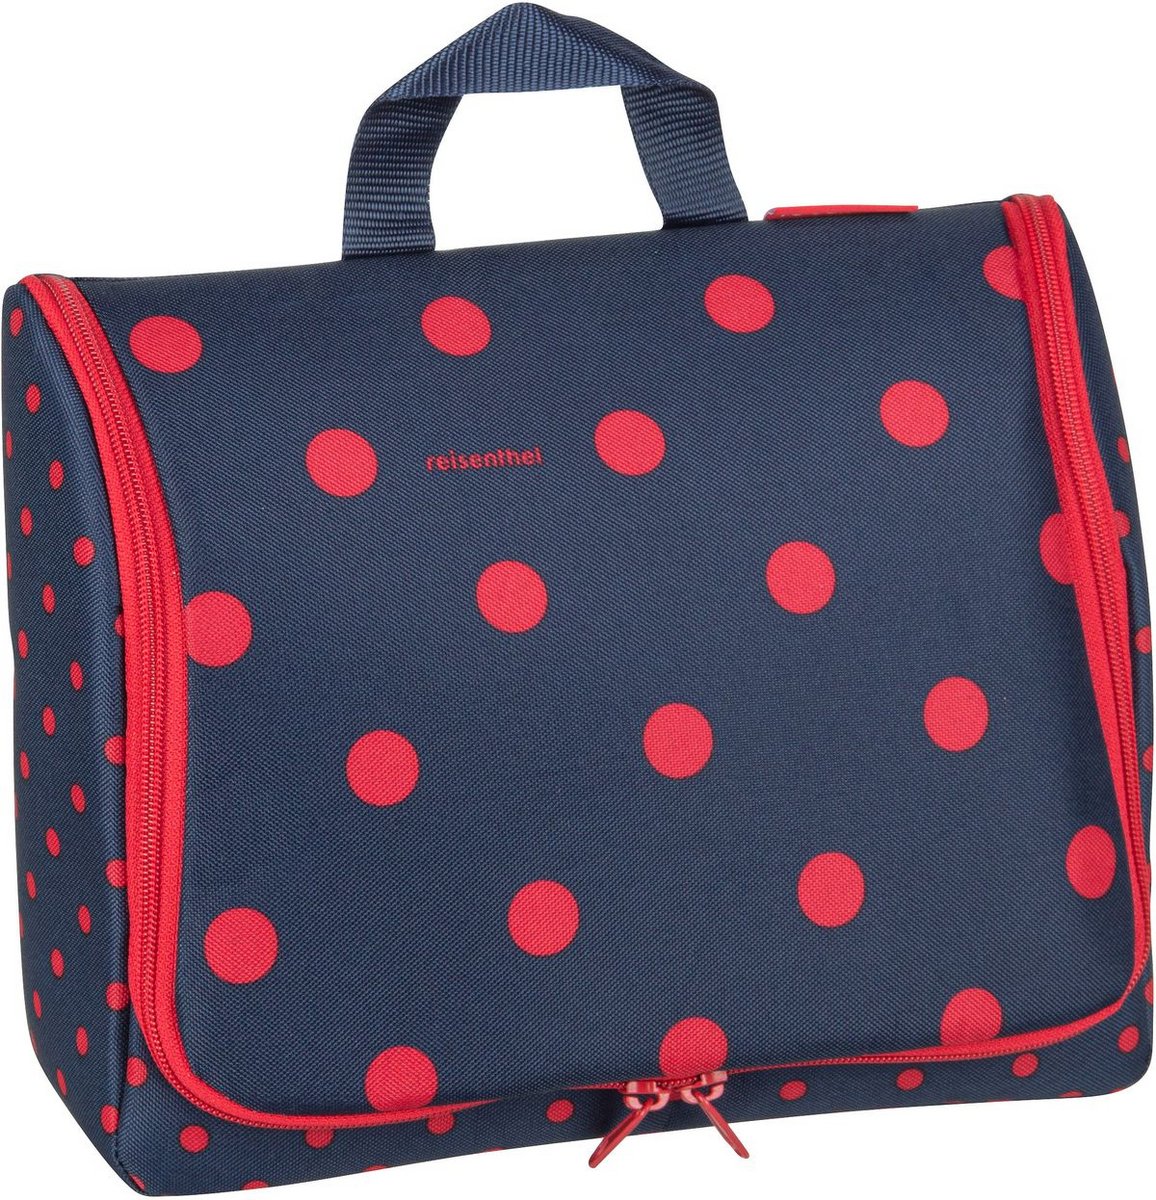 reisenthel Kulturbeutel Beauty Case toiletbag XL Mixed Dots Red (4 Liter)  - Onlineshop Taschenkaufhaus